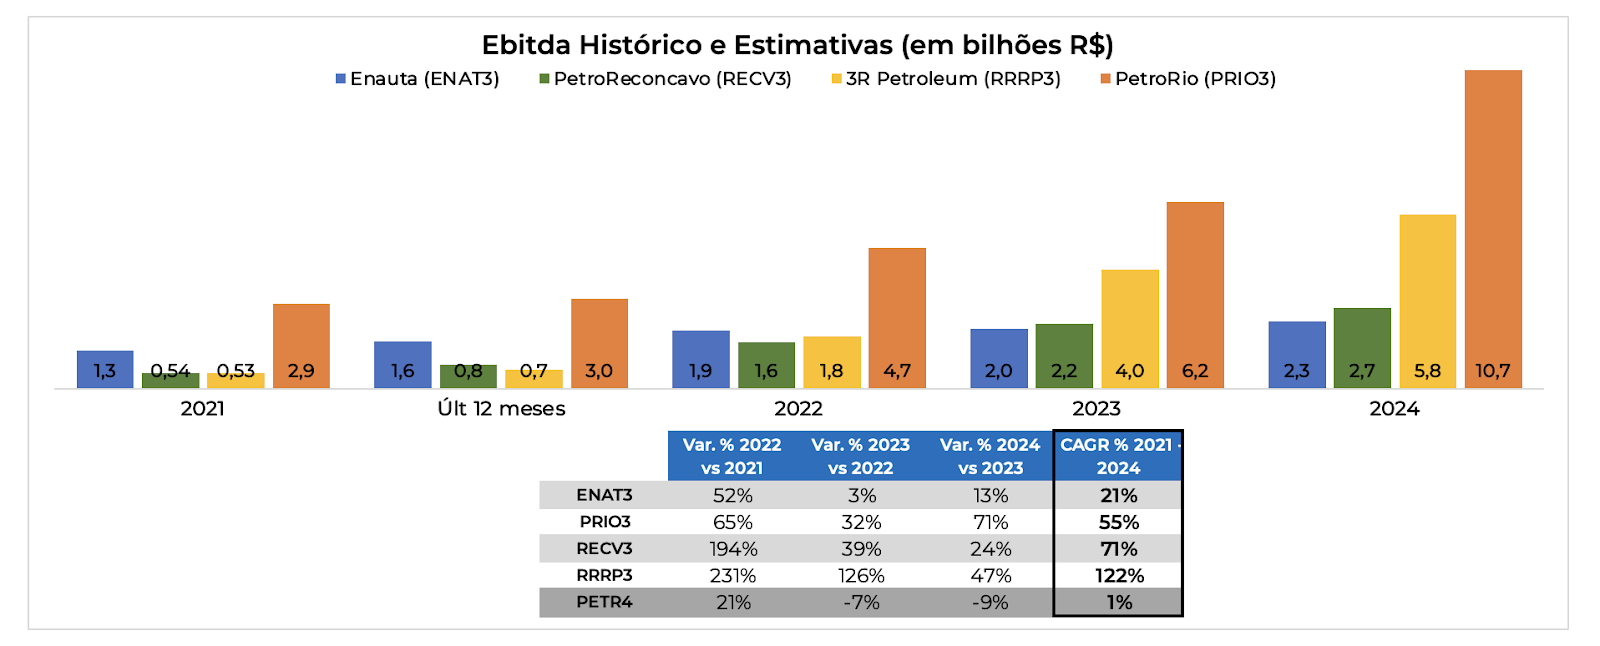 Ebitda histórico e consenso de mercado de ENAT, PRIO, RECV, RRRP e PETR. 